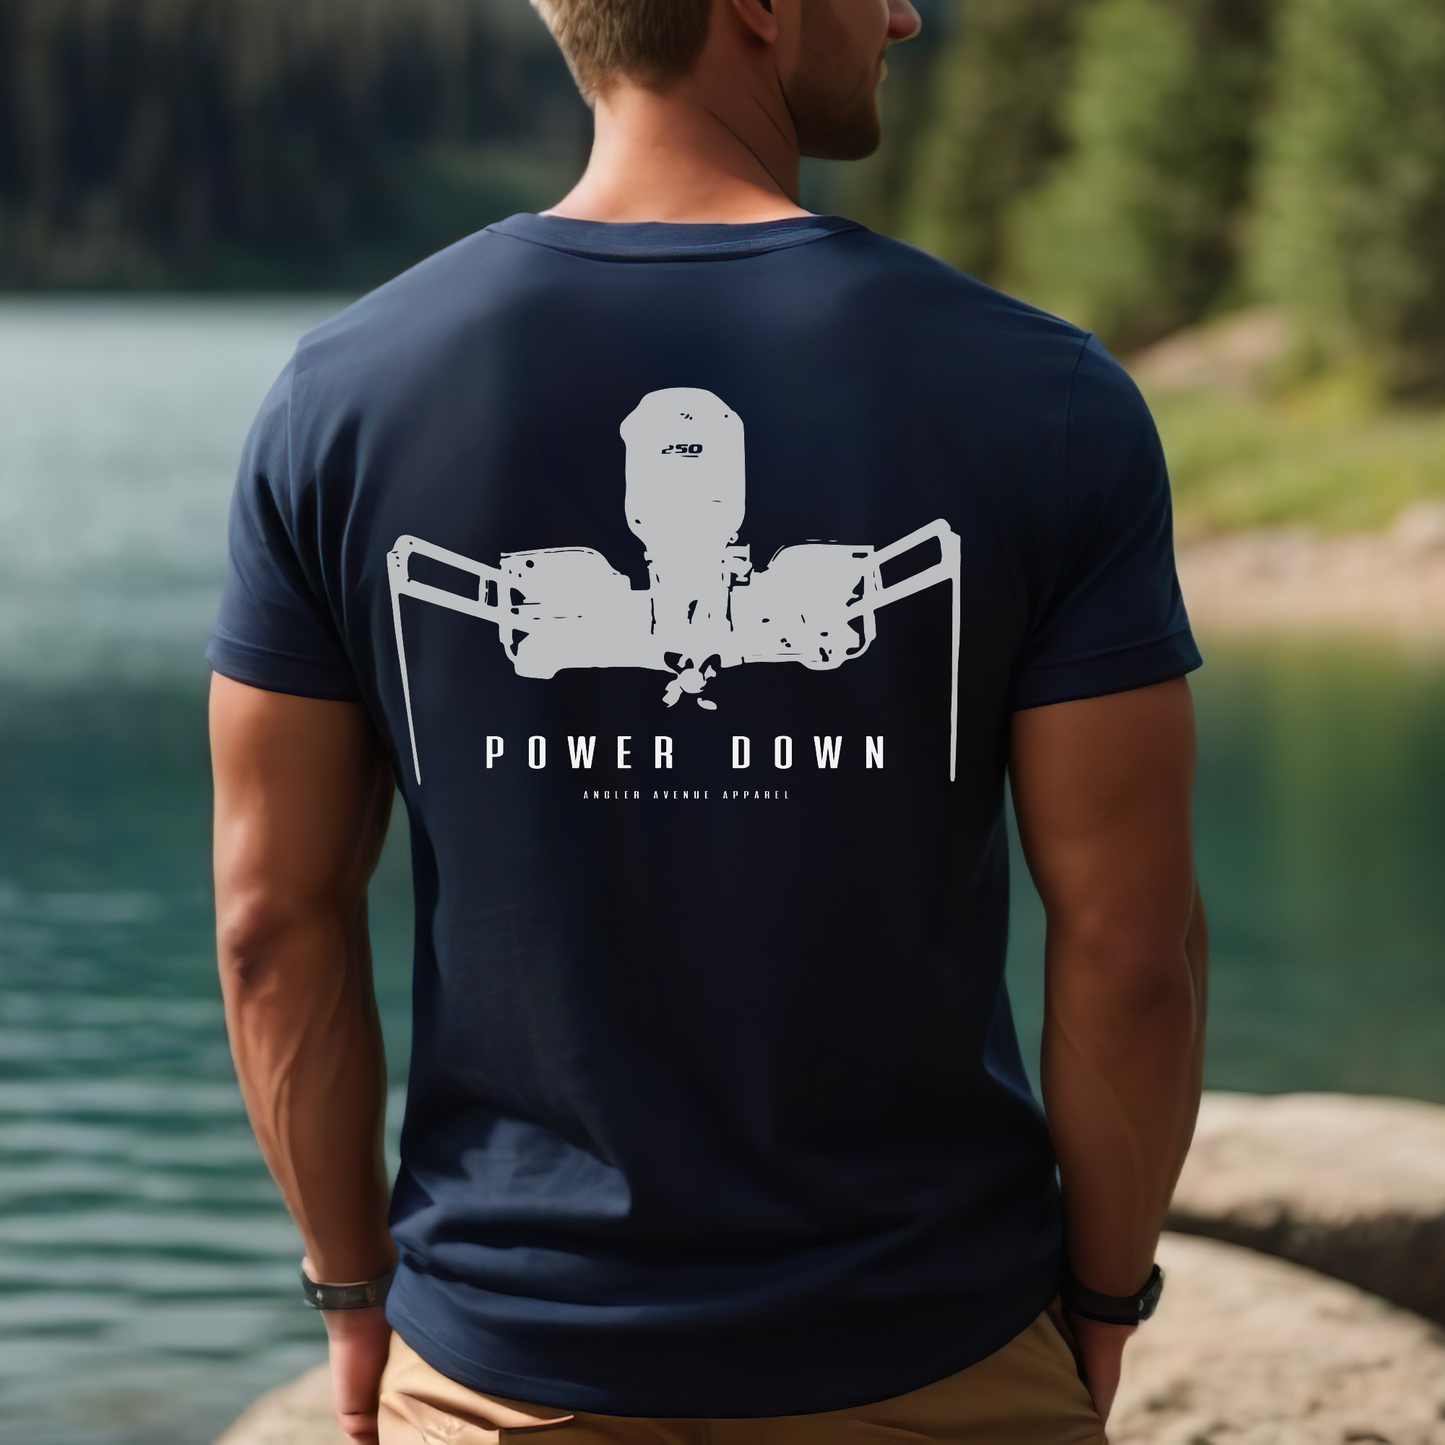 Angler Avenue Power Down T-Shirt